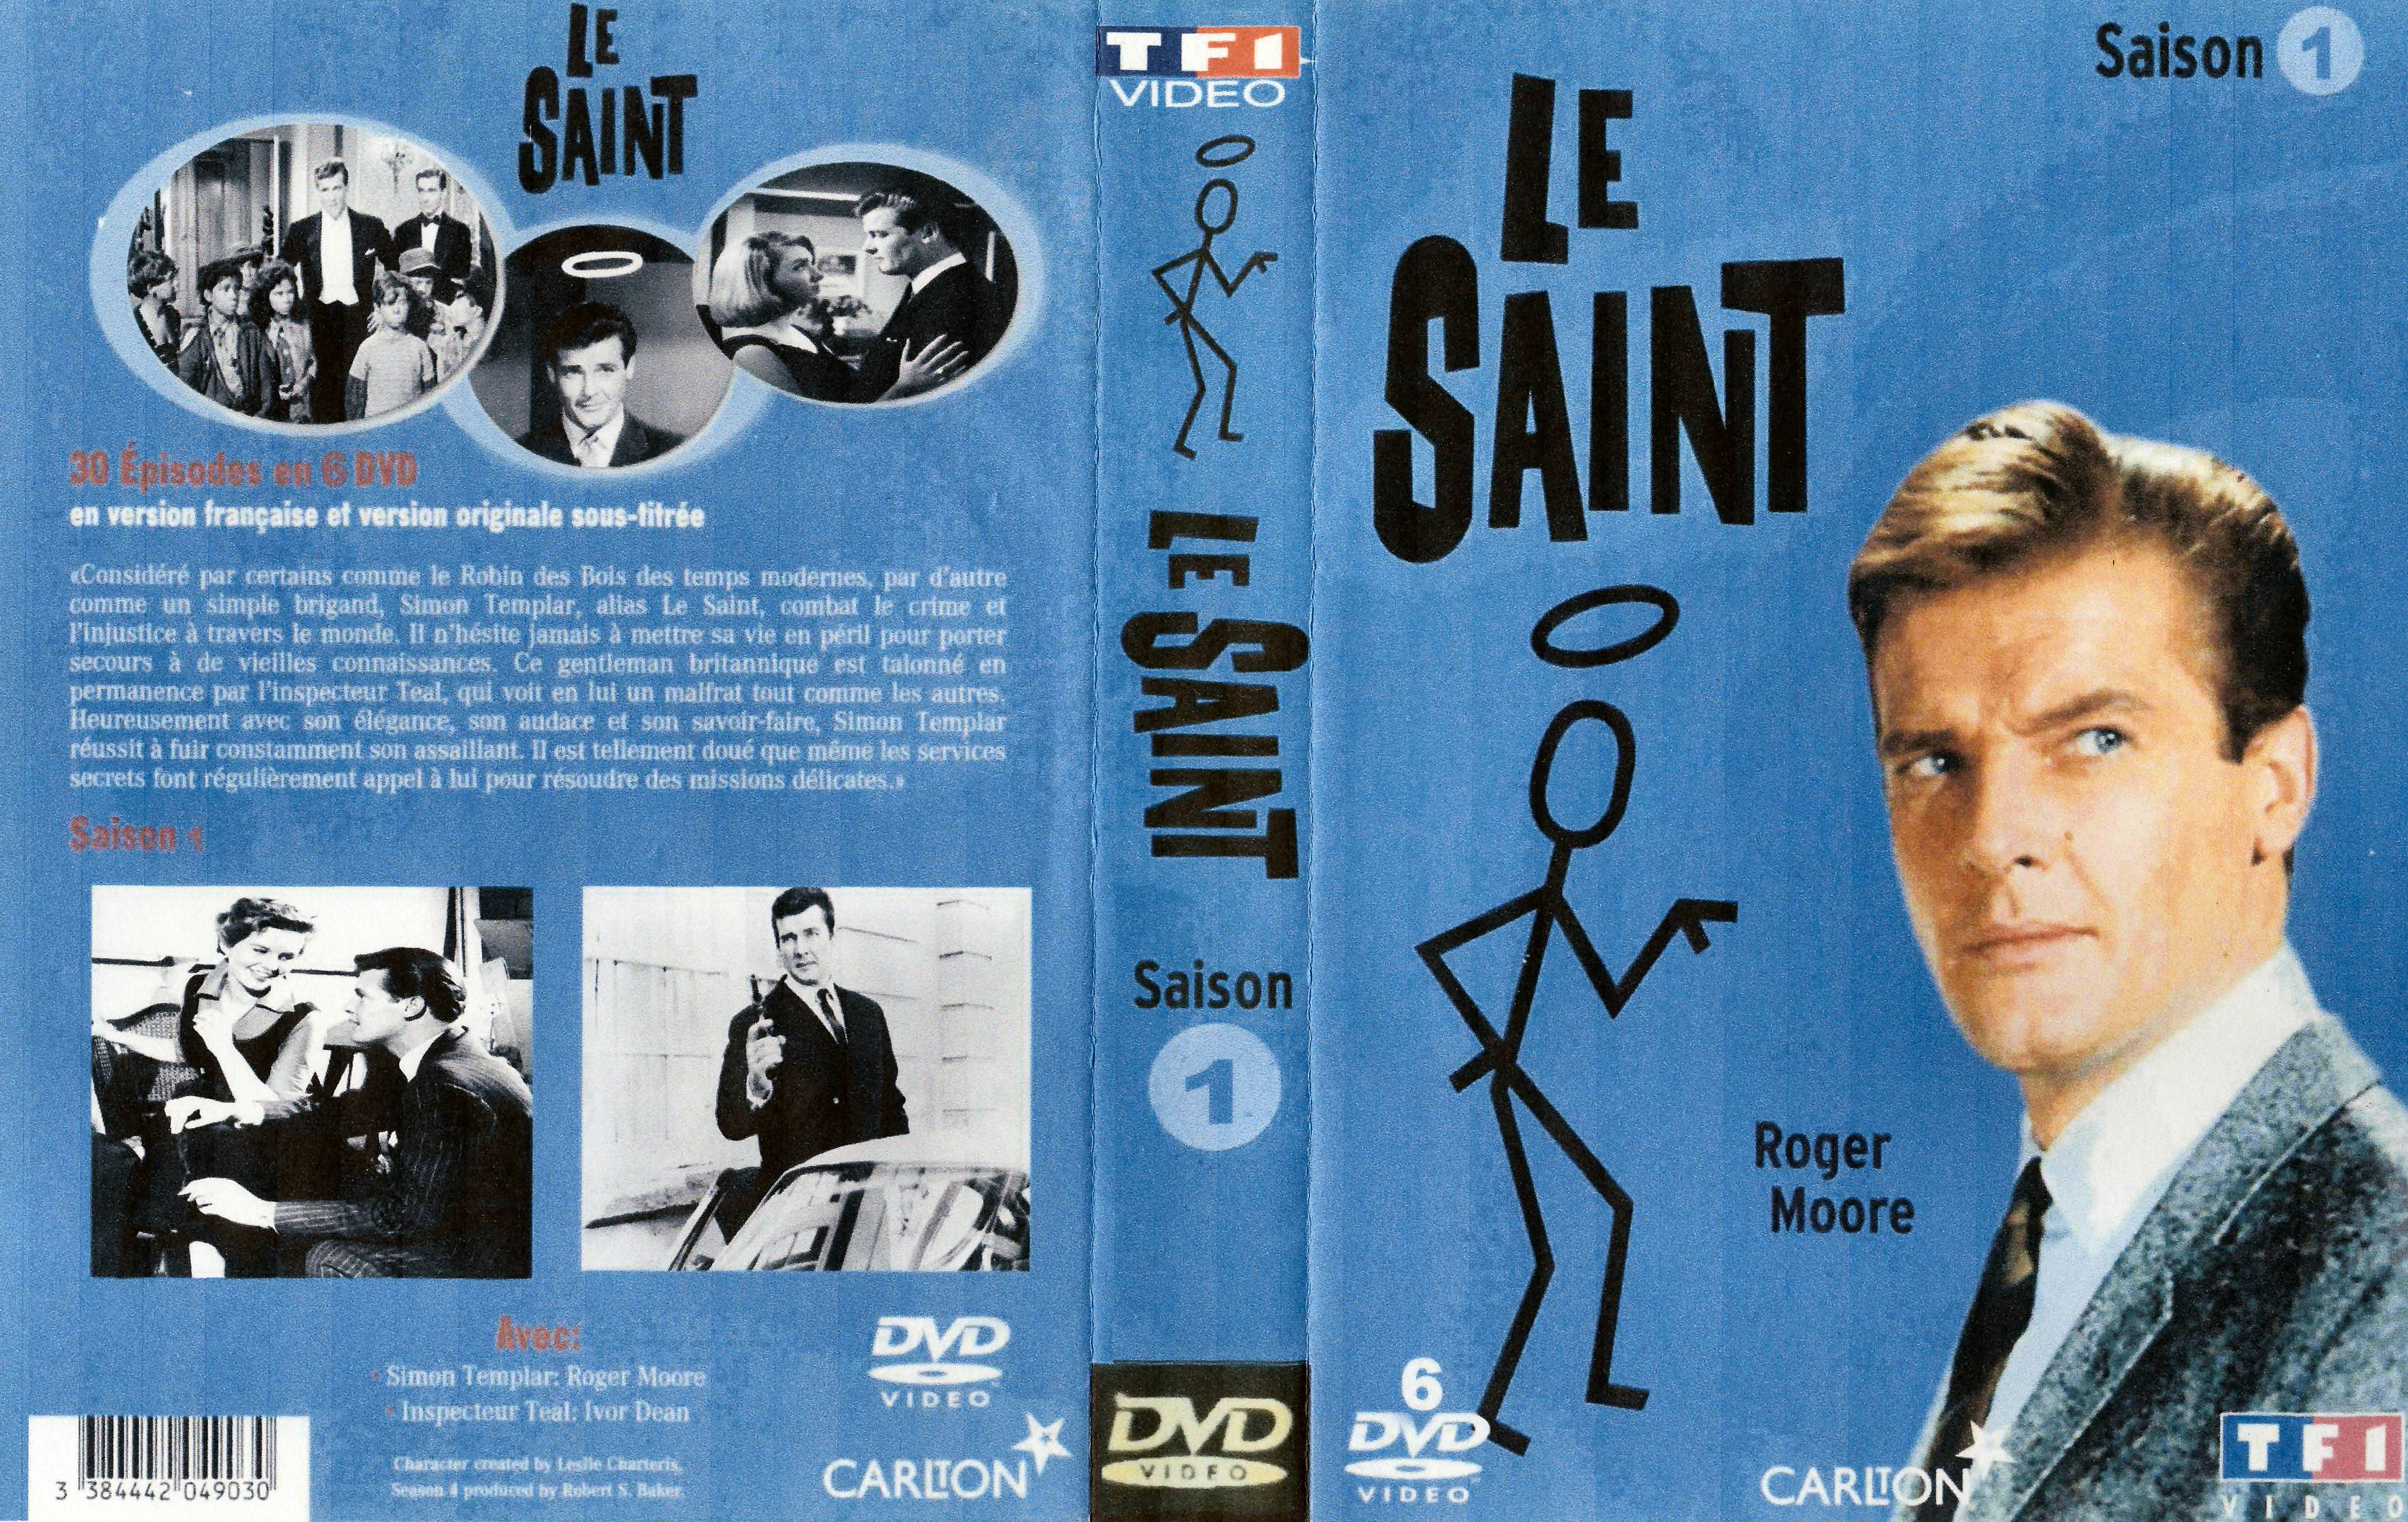 The Saint Seizoen 1 ( 1962 ) DvD 2